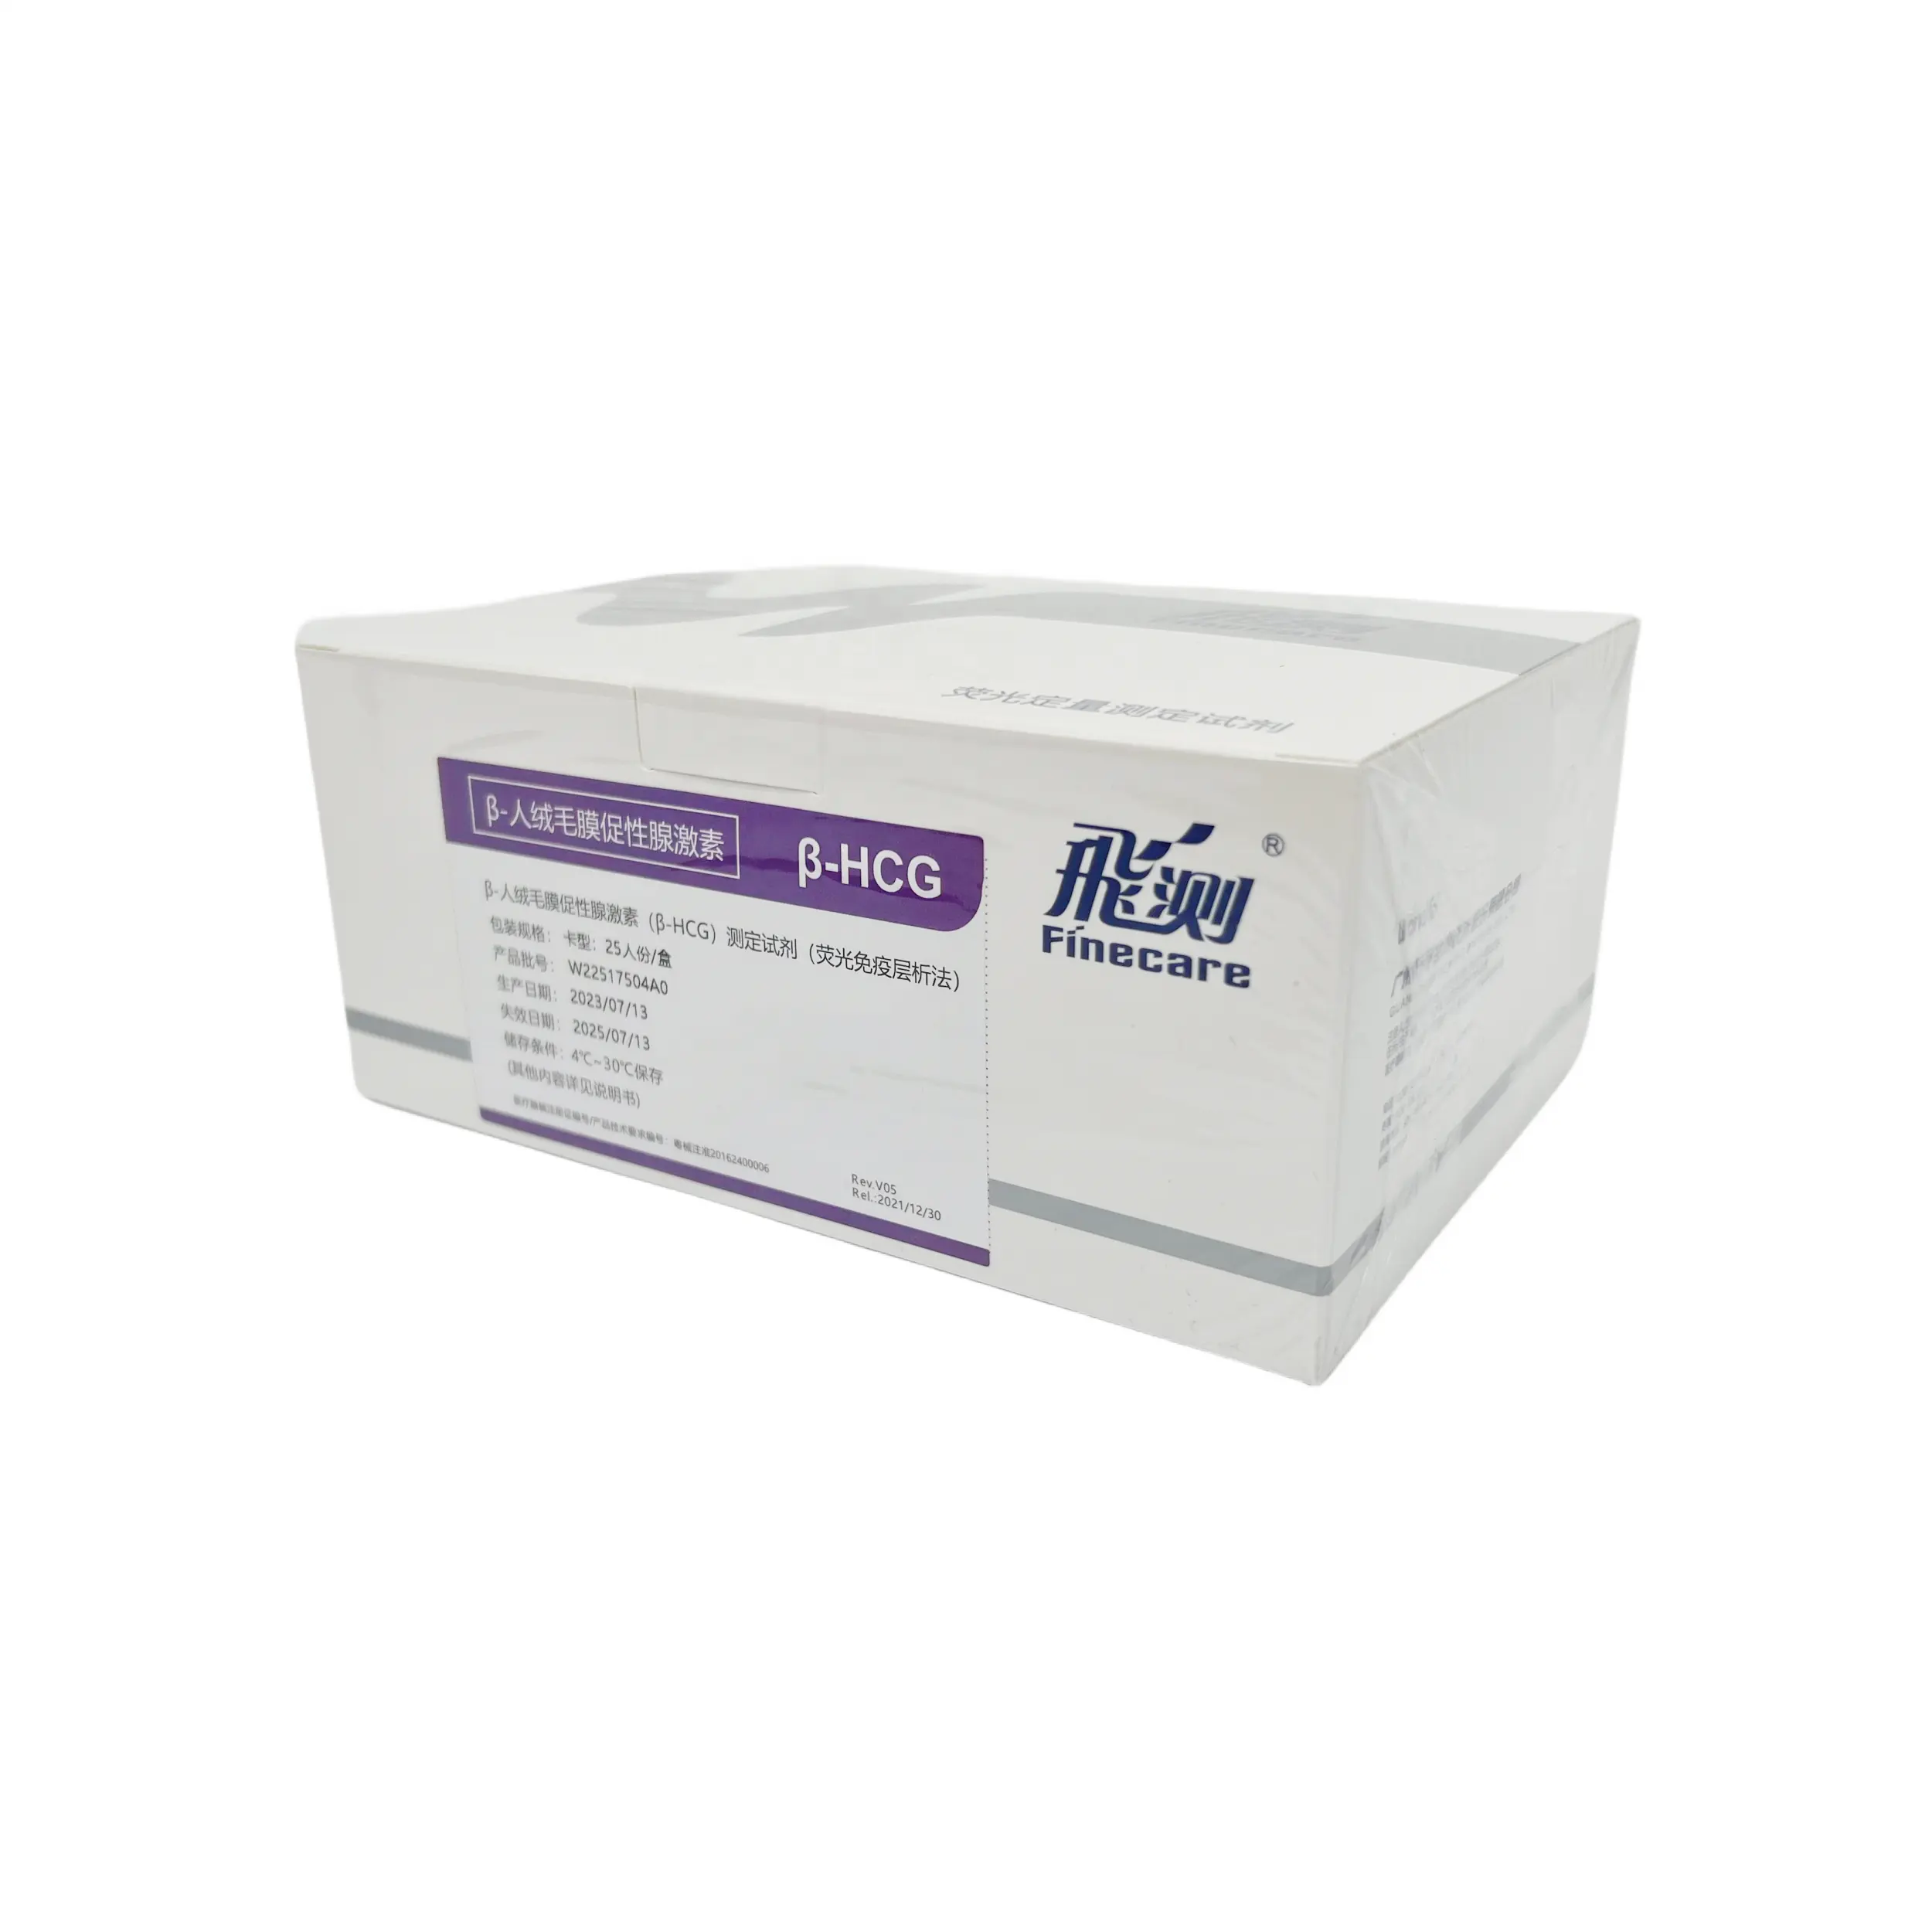 Finecare Kit B-HCG Rapid Quantitative Test Wondfo Fertility Beta HCG Test Kit for FS113 FS114 FS205 FS112